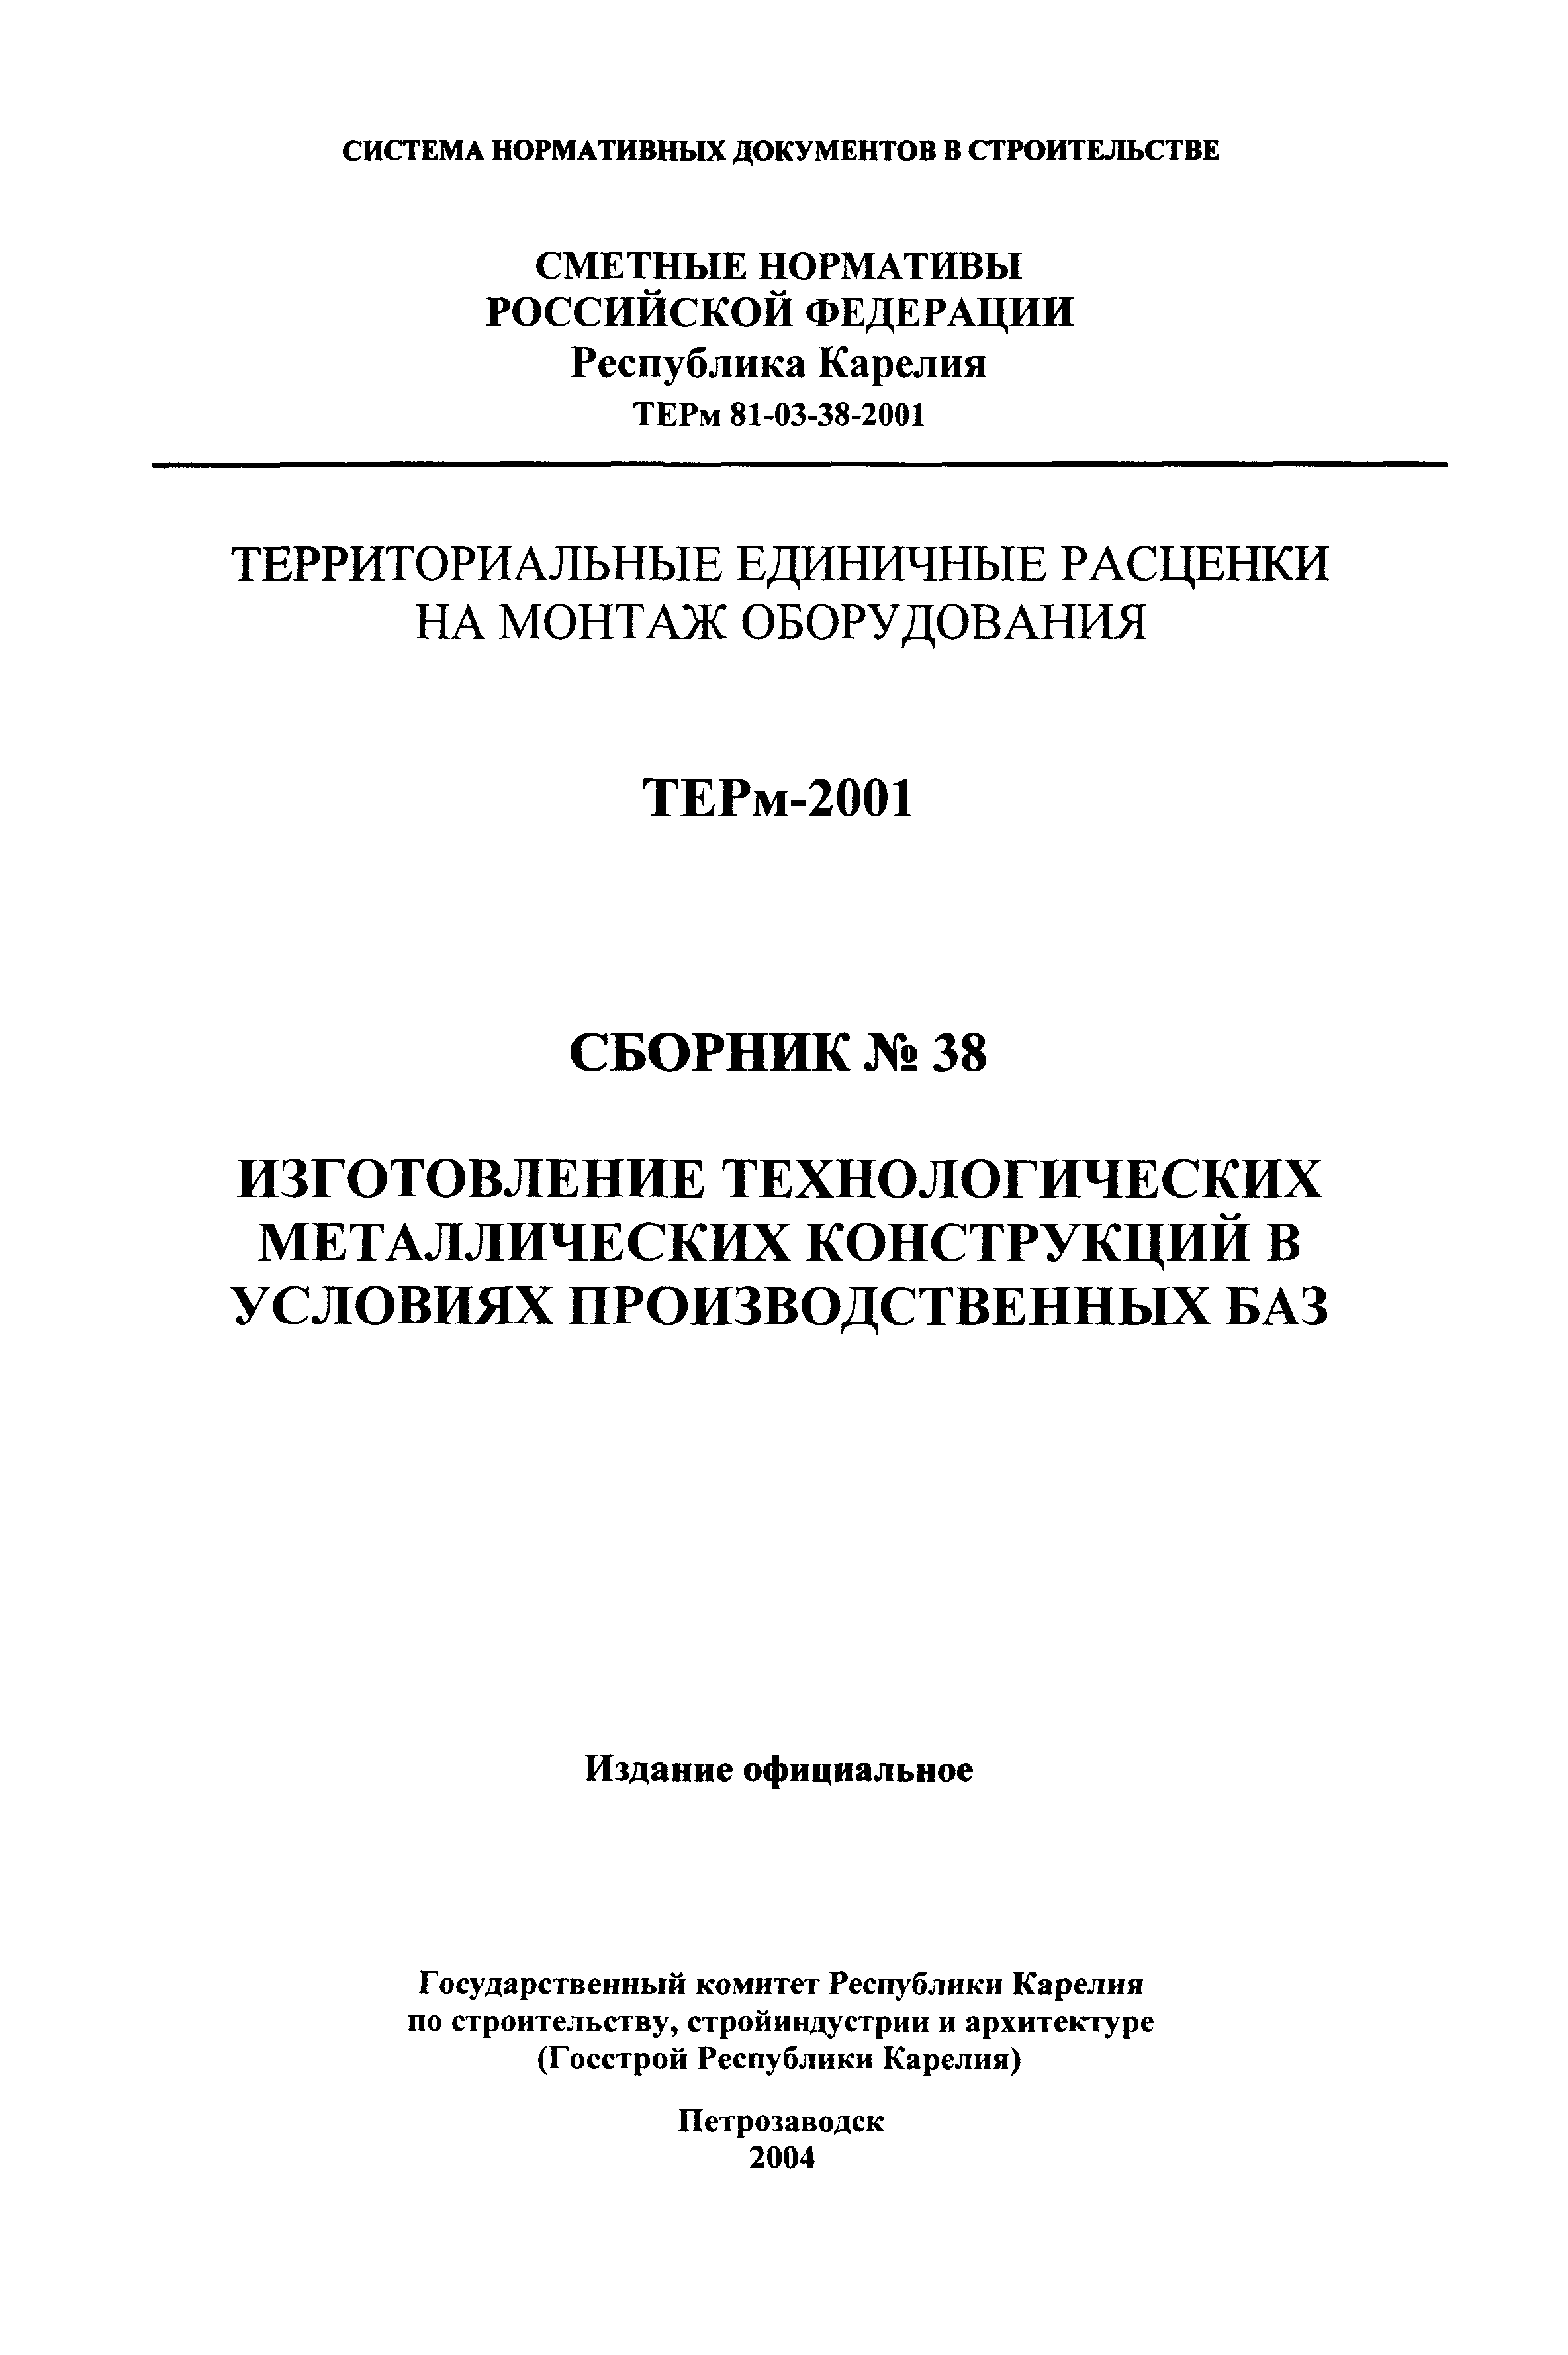 ТЕРм Республика Карелия 2001-38